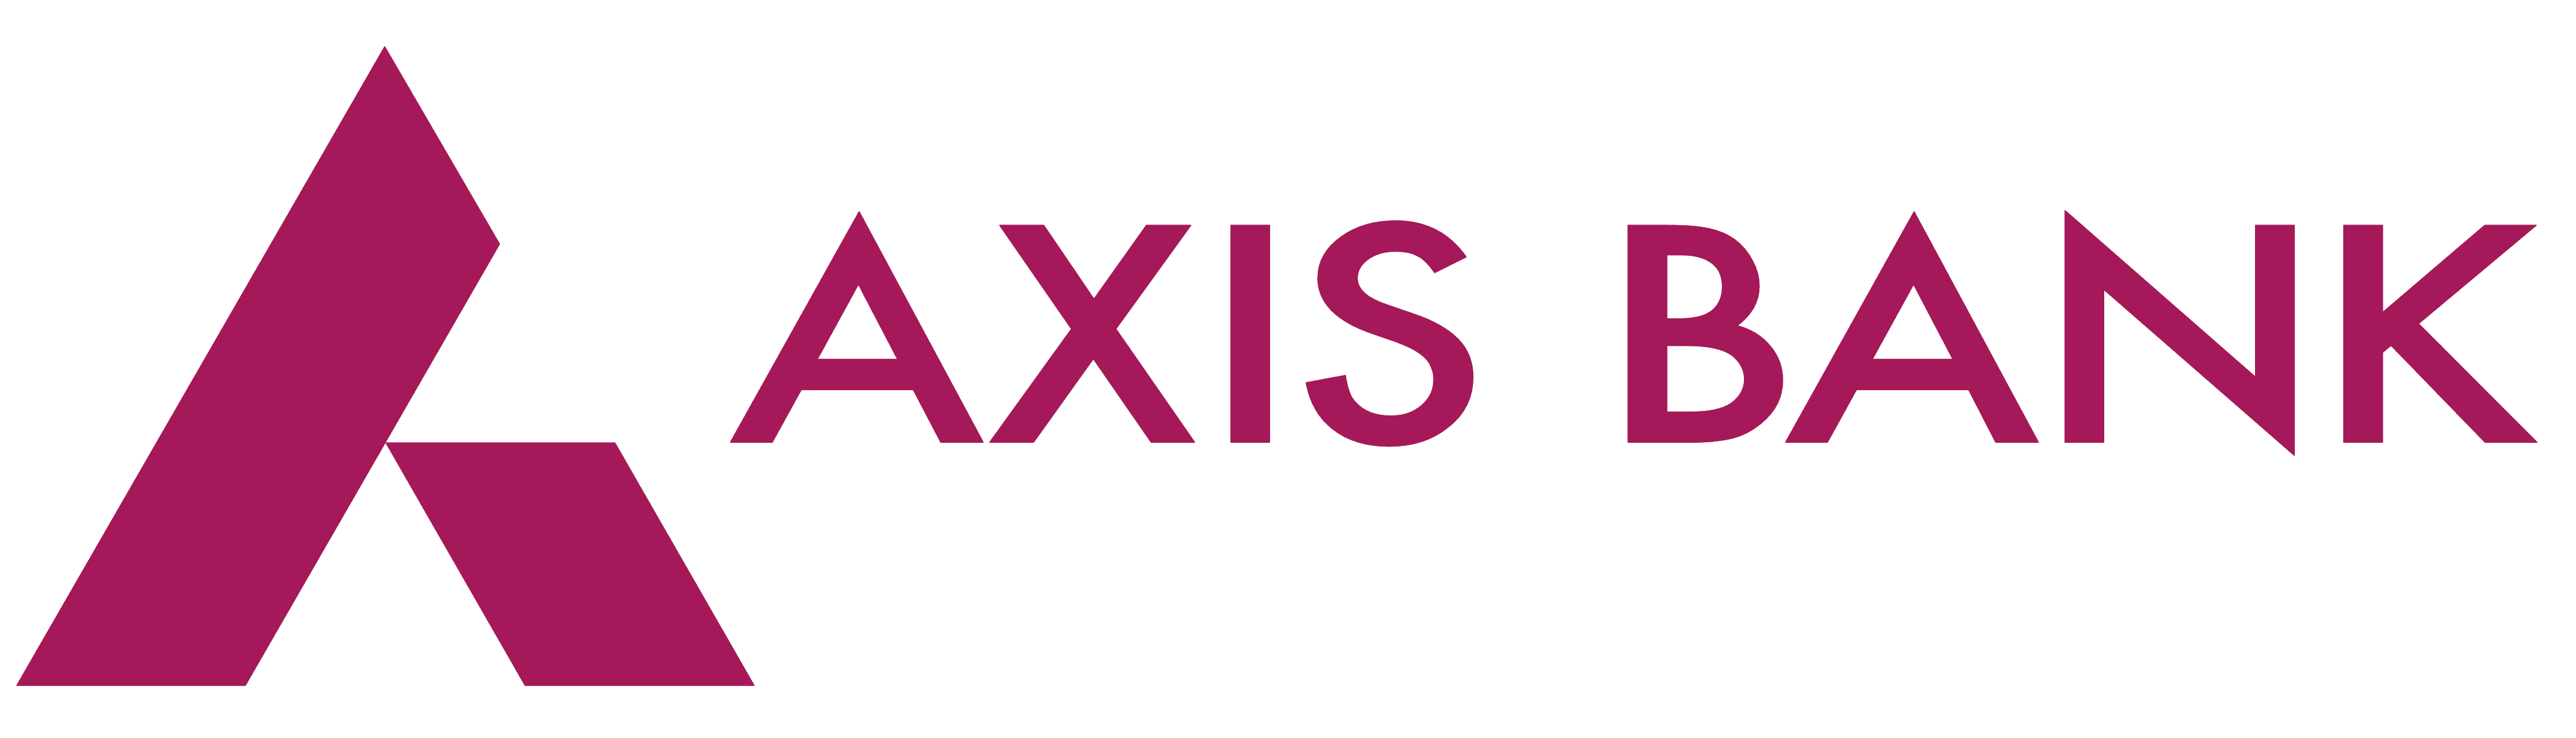 Axis Bank logo, logotype